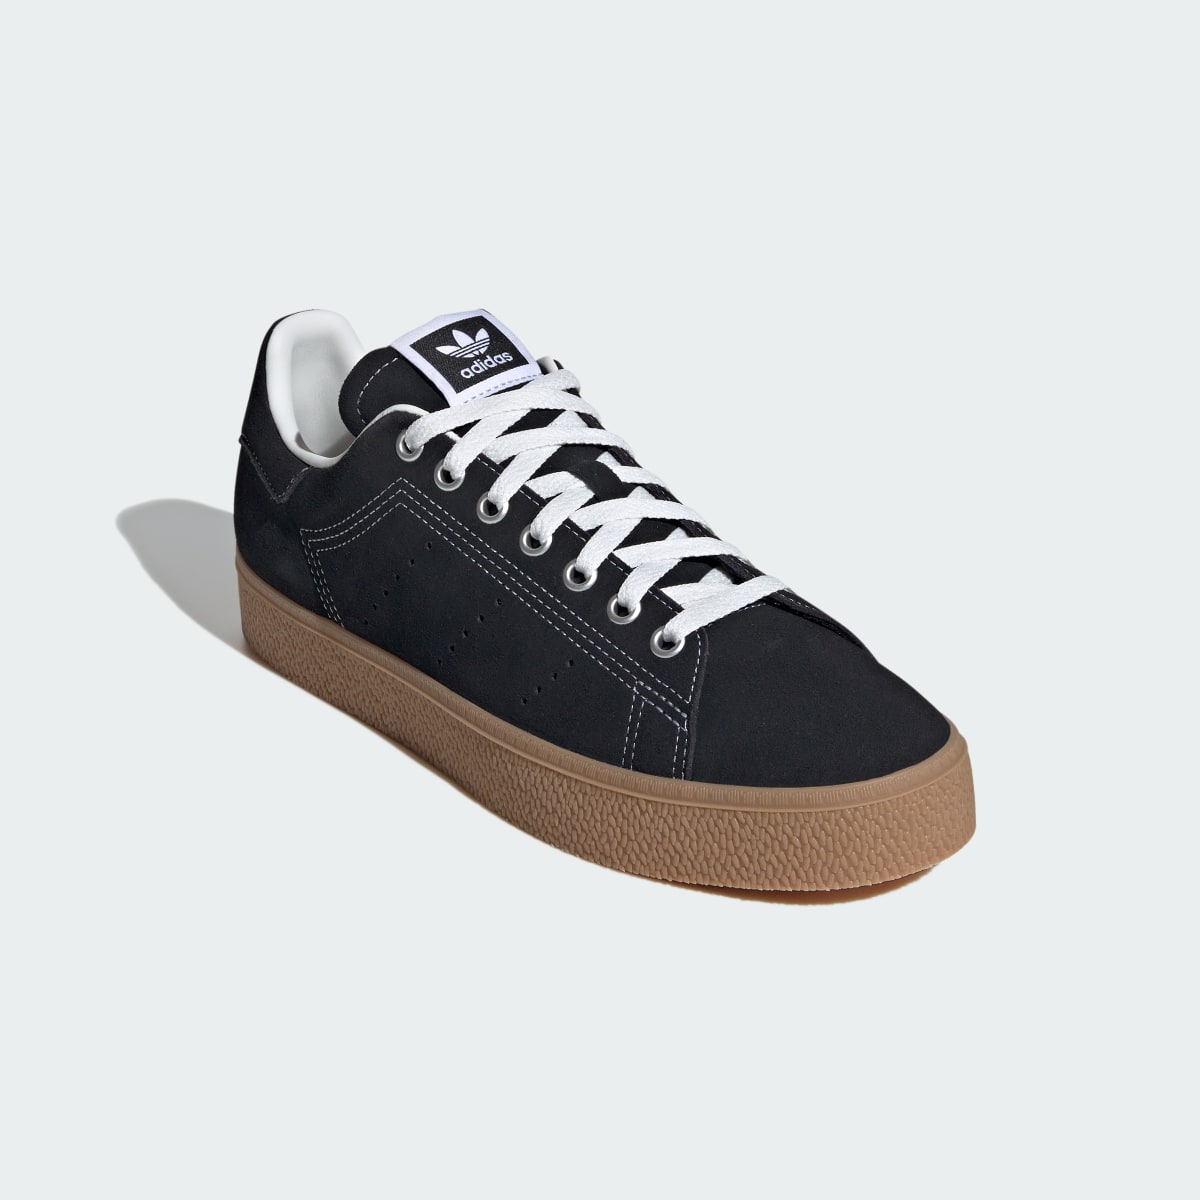 Adidas Stan Smith CS Shoes. 5